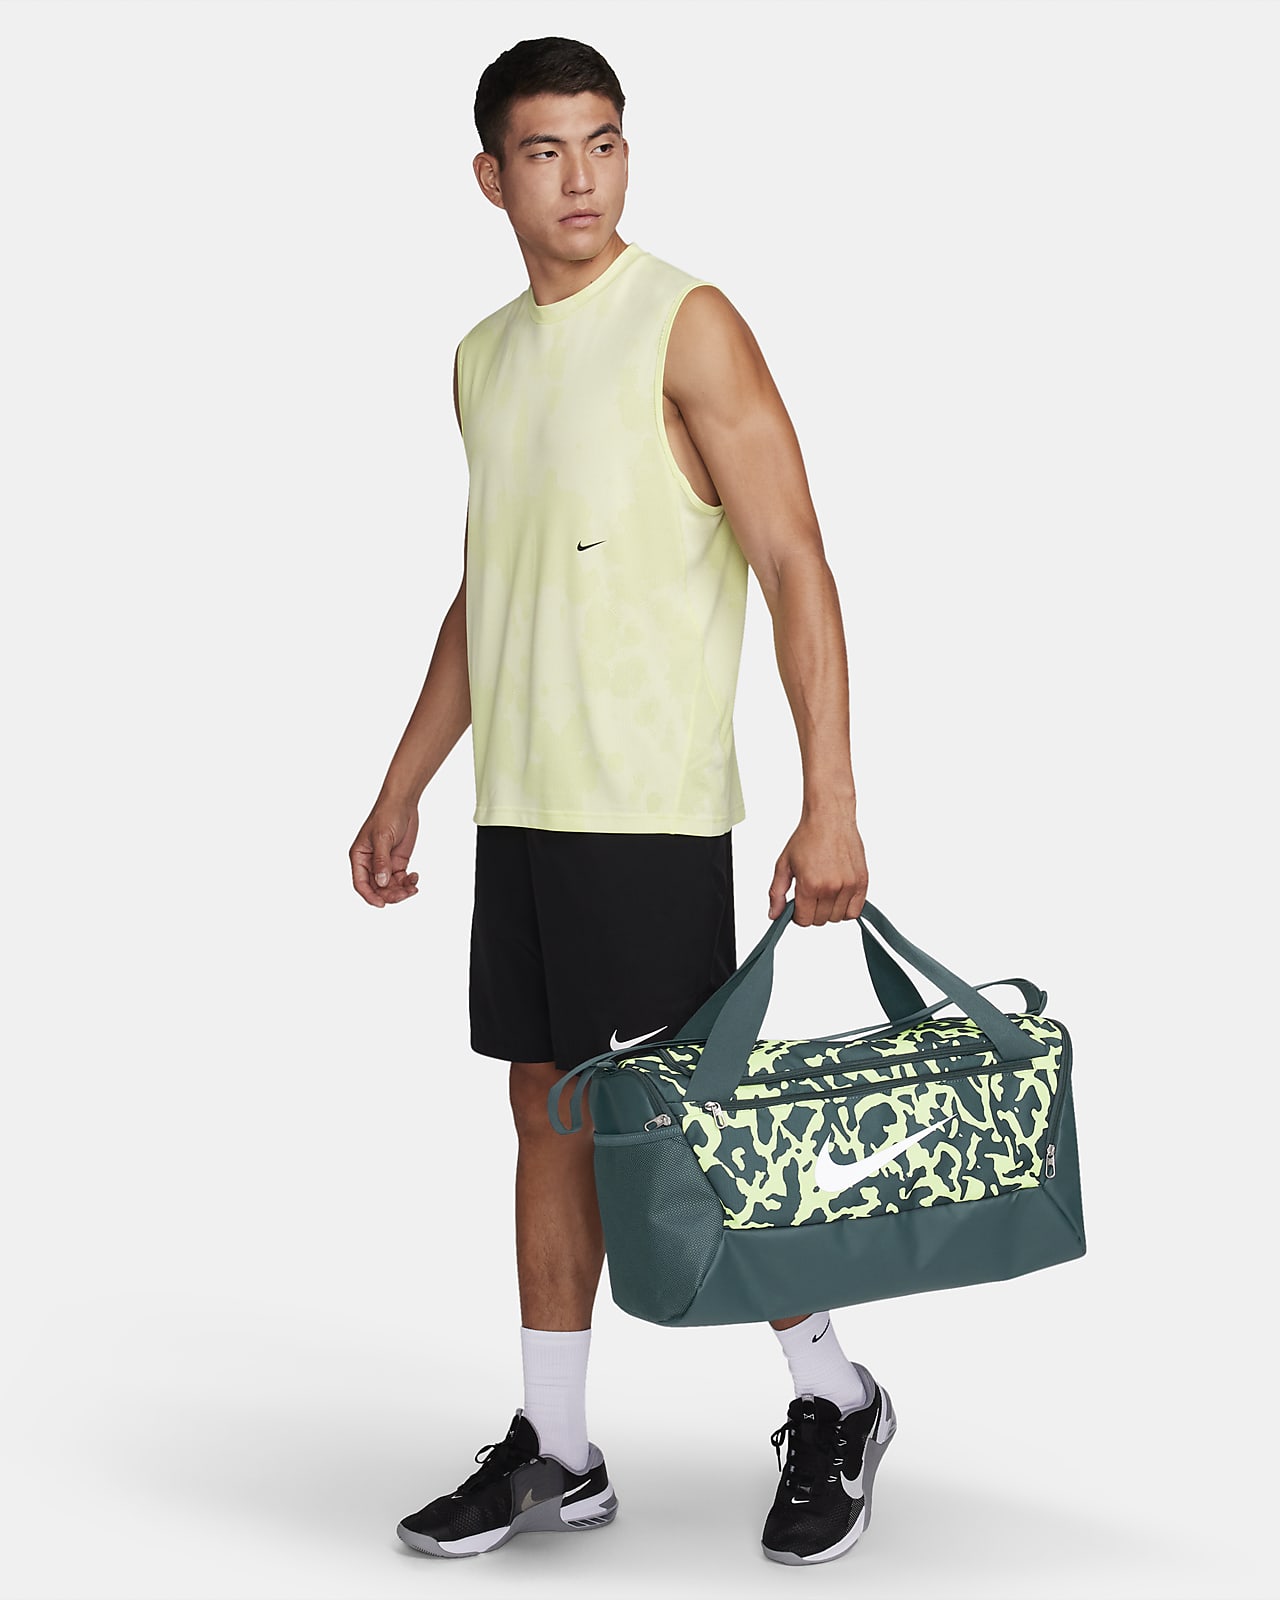 Nike Brasilia Duffel Bag - Deep Jungle/Lt Lemon Twist - FB2827-328